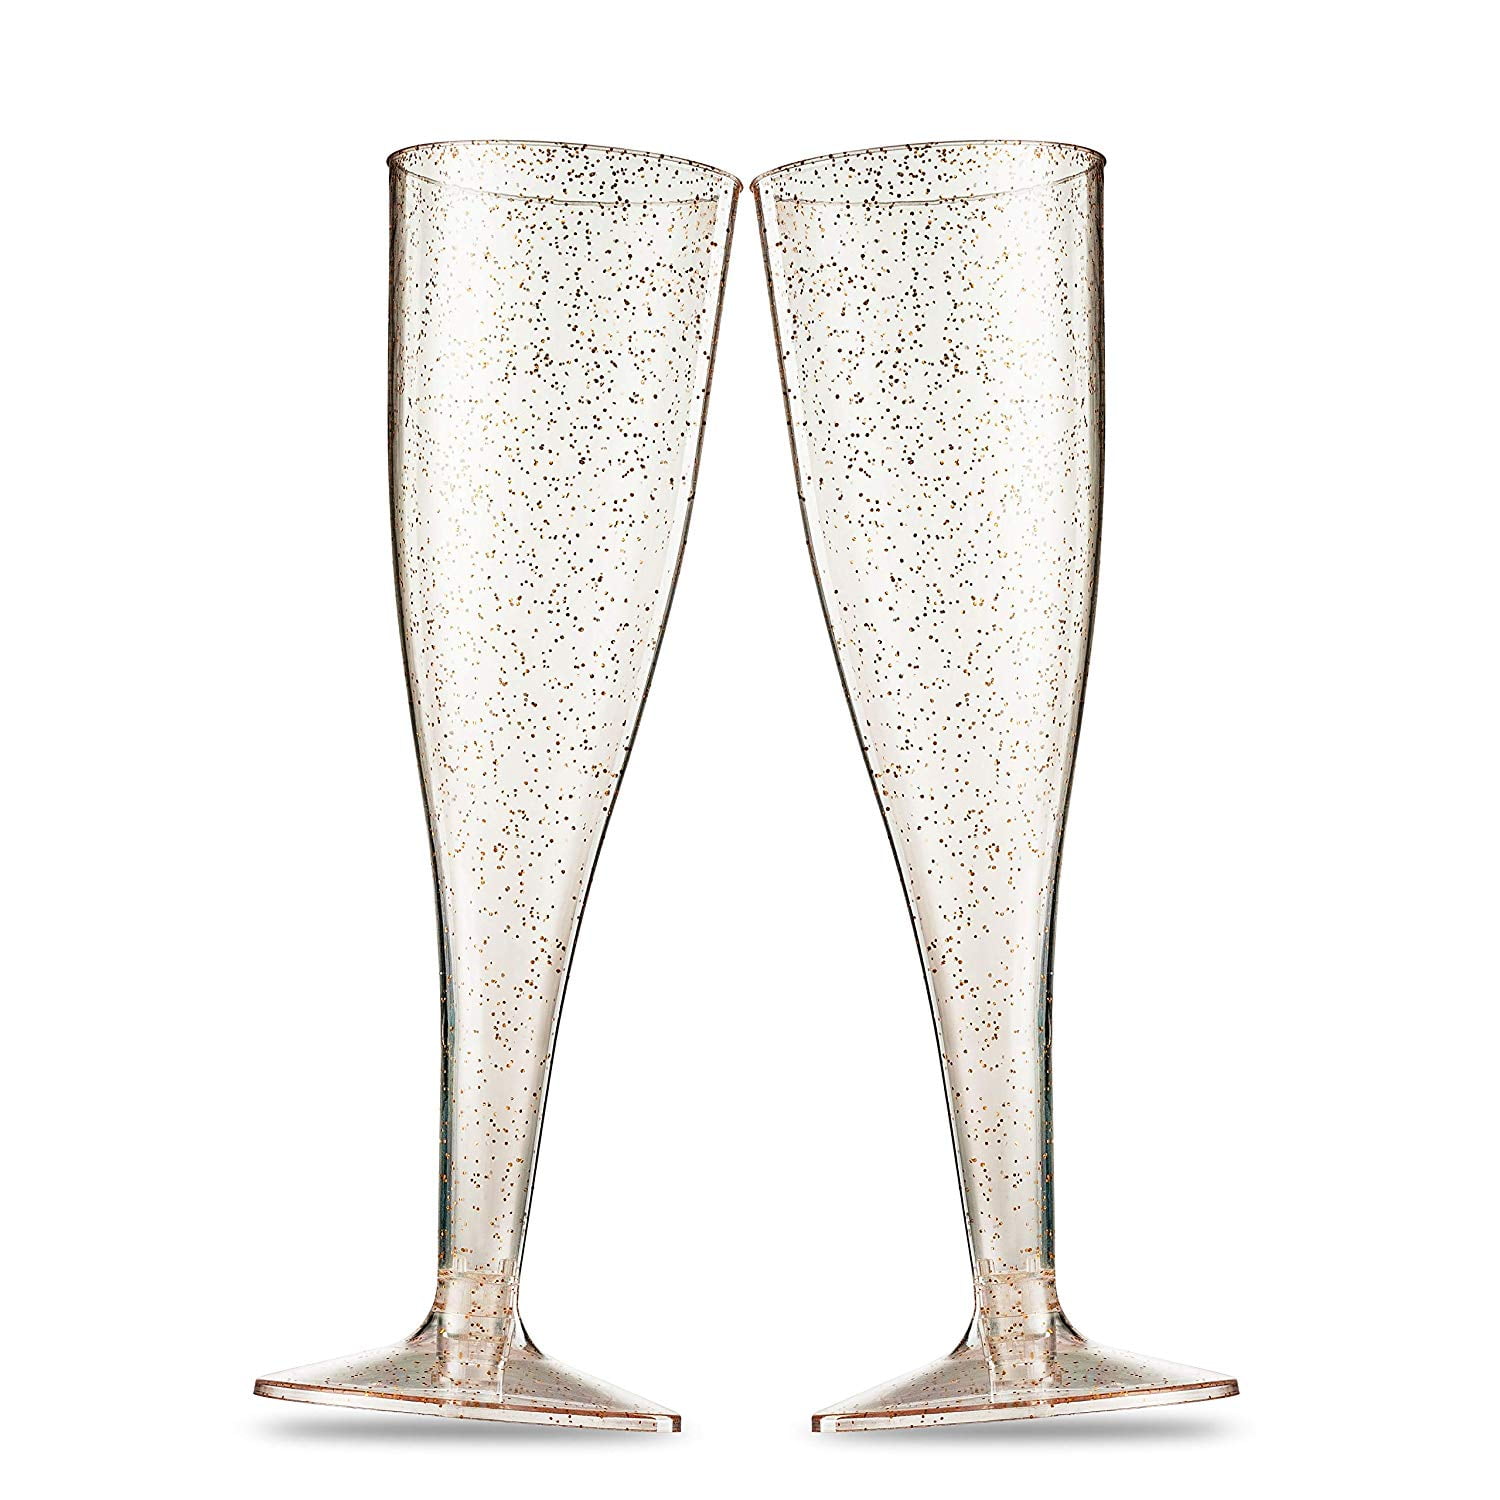 6 dzs 2" Mini Plastic Champagne Cups Glasses Wedding Shower Favors Gold/Silver 